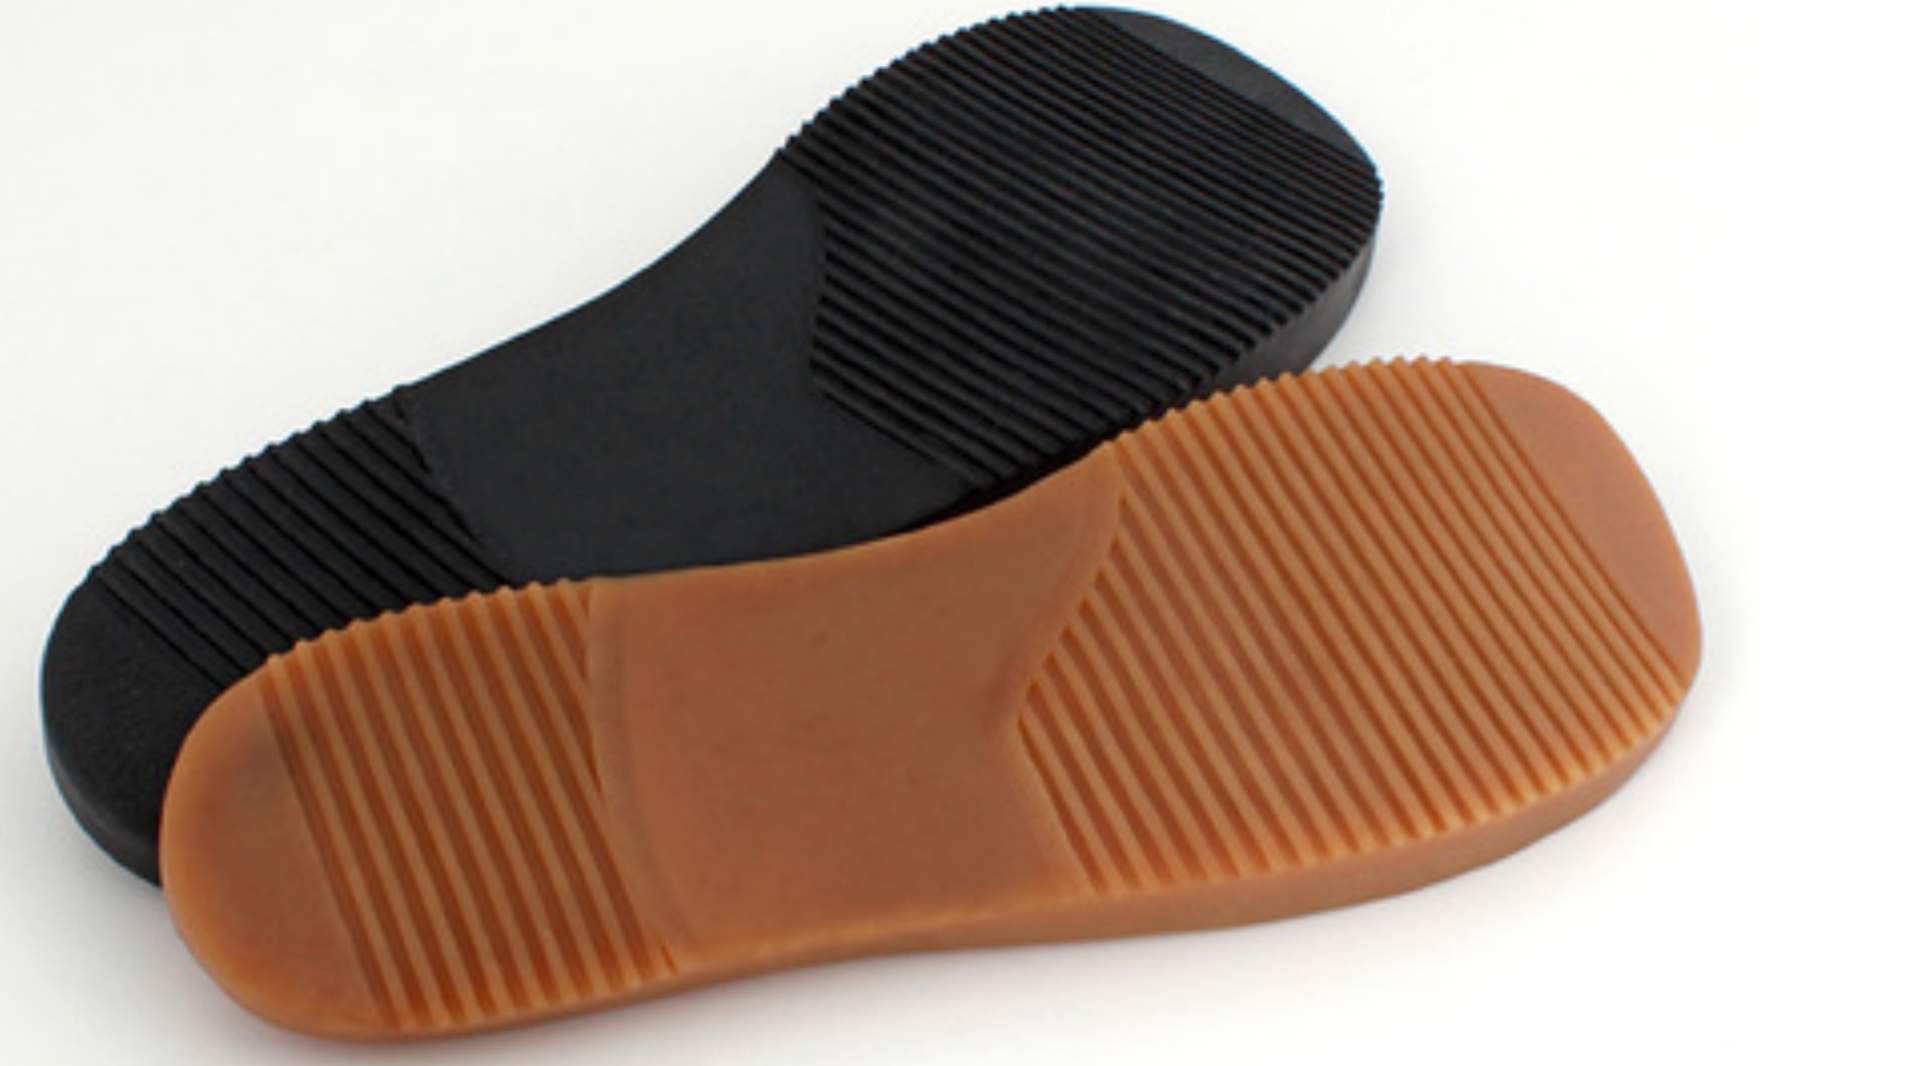 Leather vs rubber sole